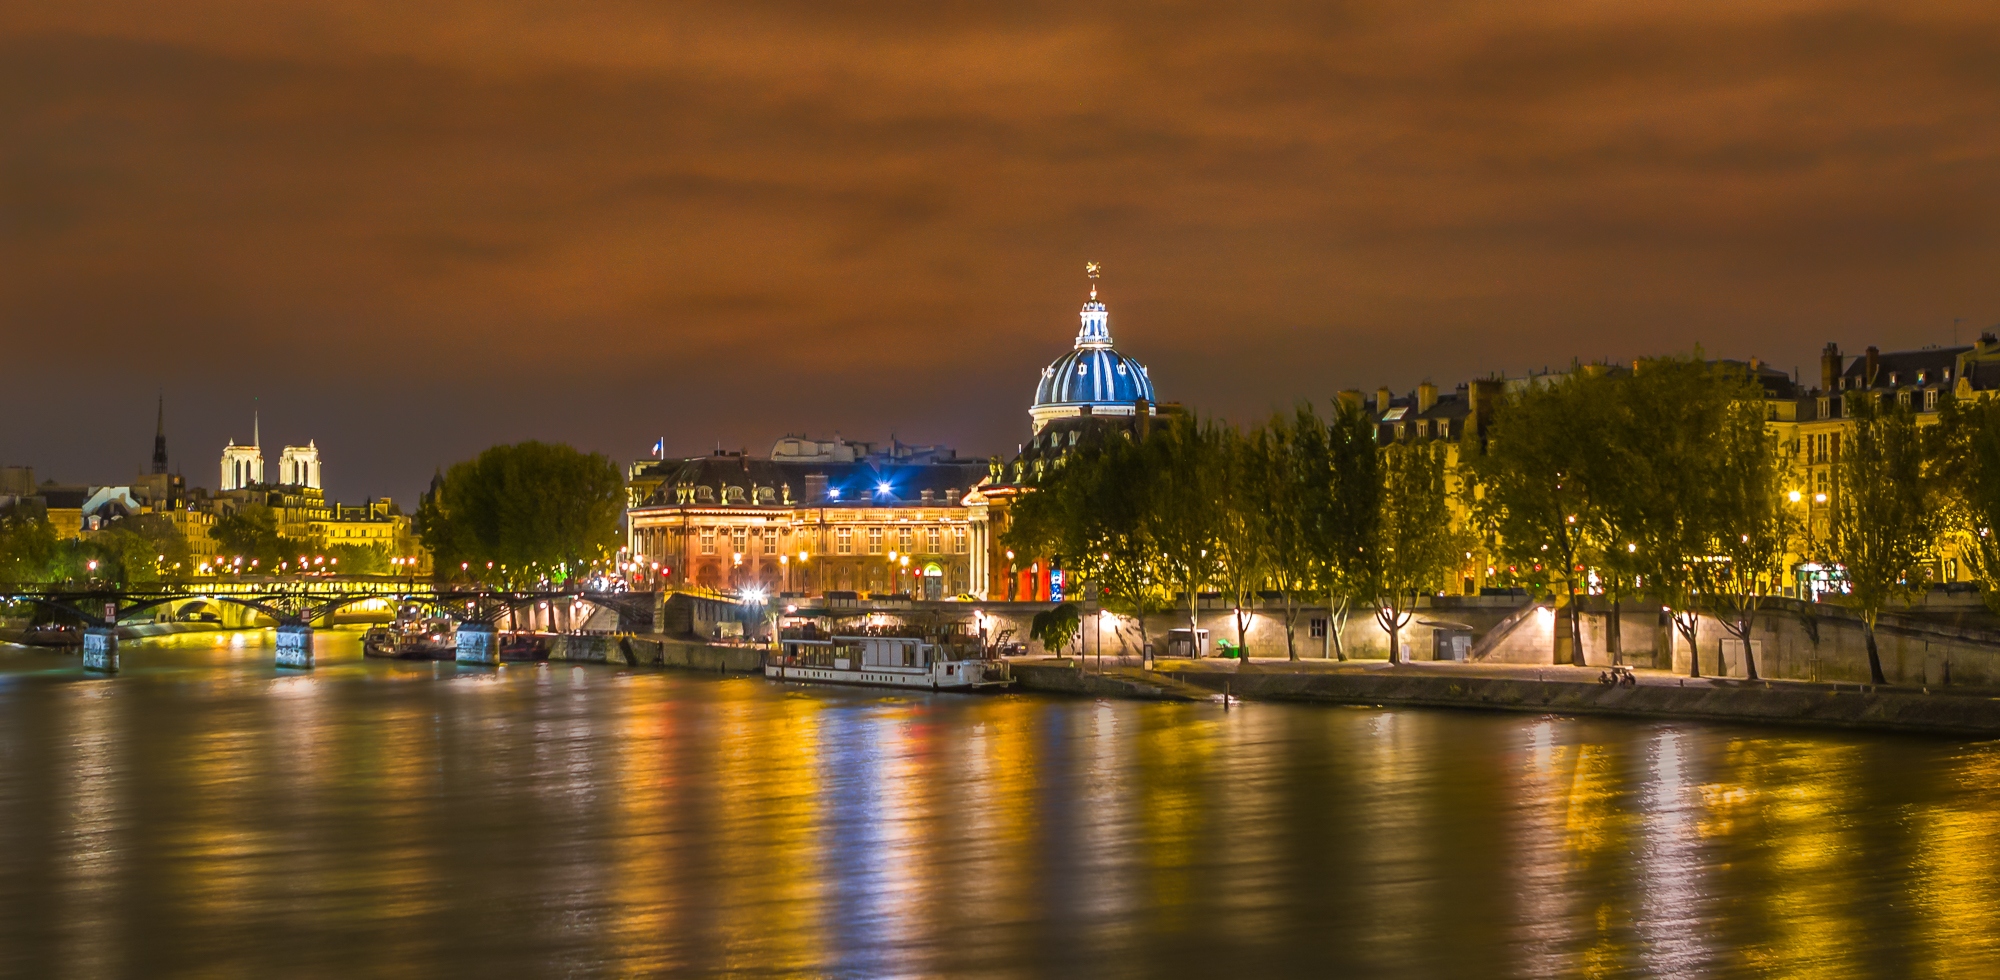 The glowing Seine.
.
Paris, France.
.